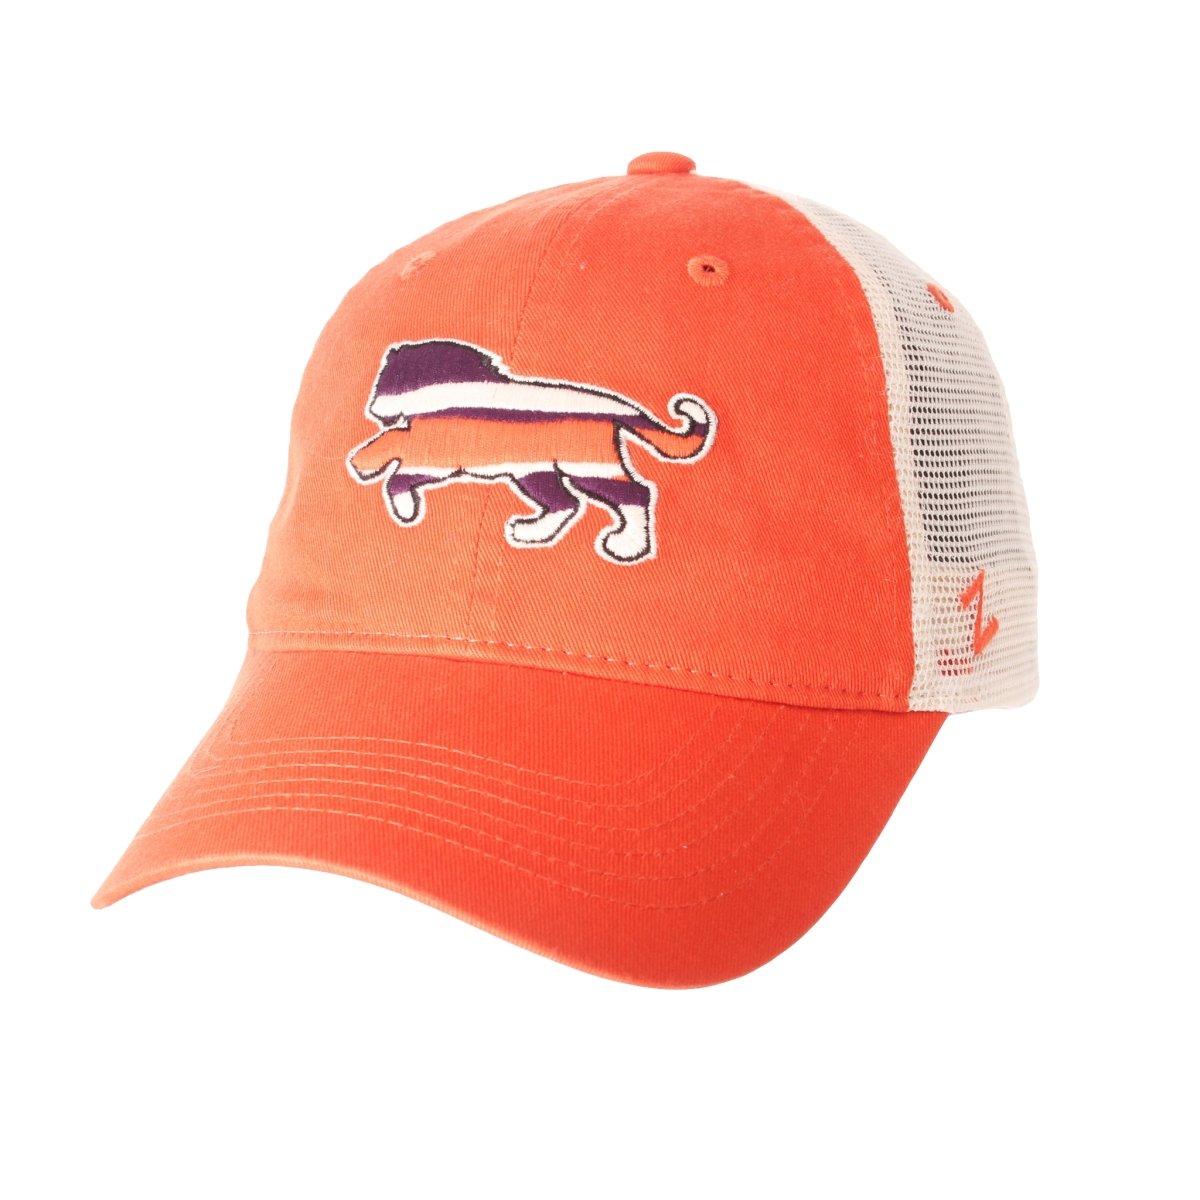 Clemson Tigers Striped Silhouette Trucker Hat - Orange - Mr. Knickerbocker